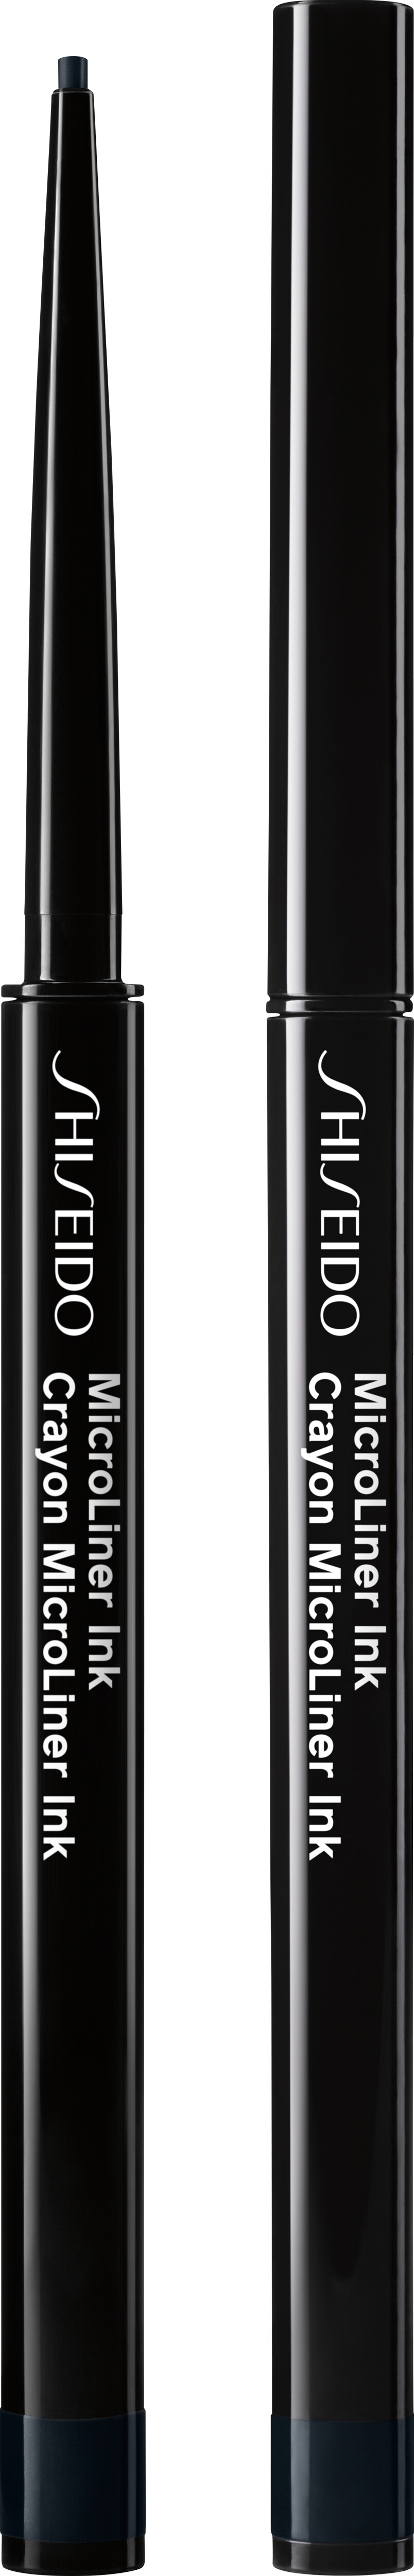 Shiseido MicroLiner Ink 0.08g 01 - Black